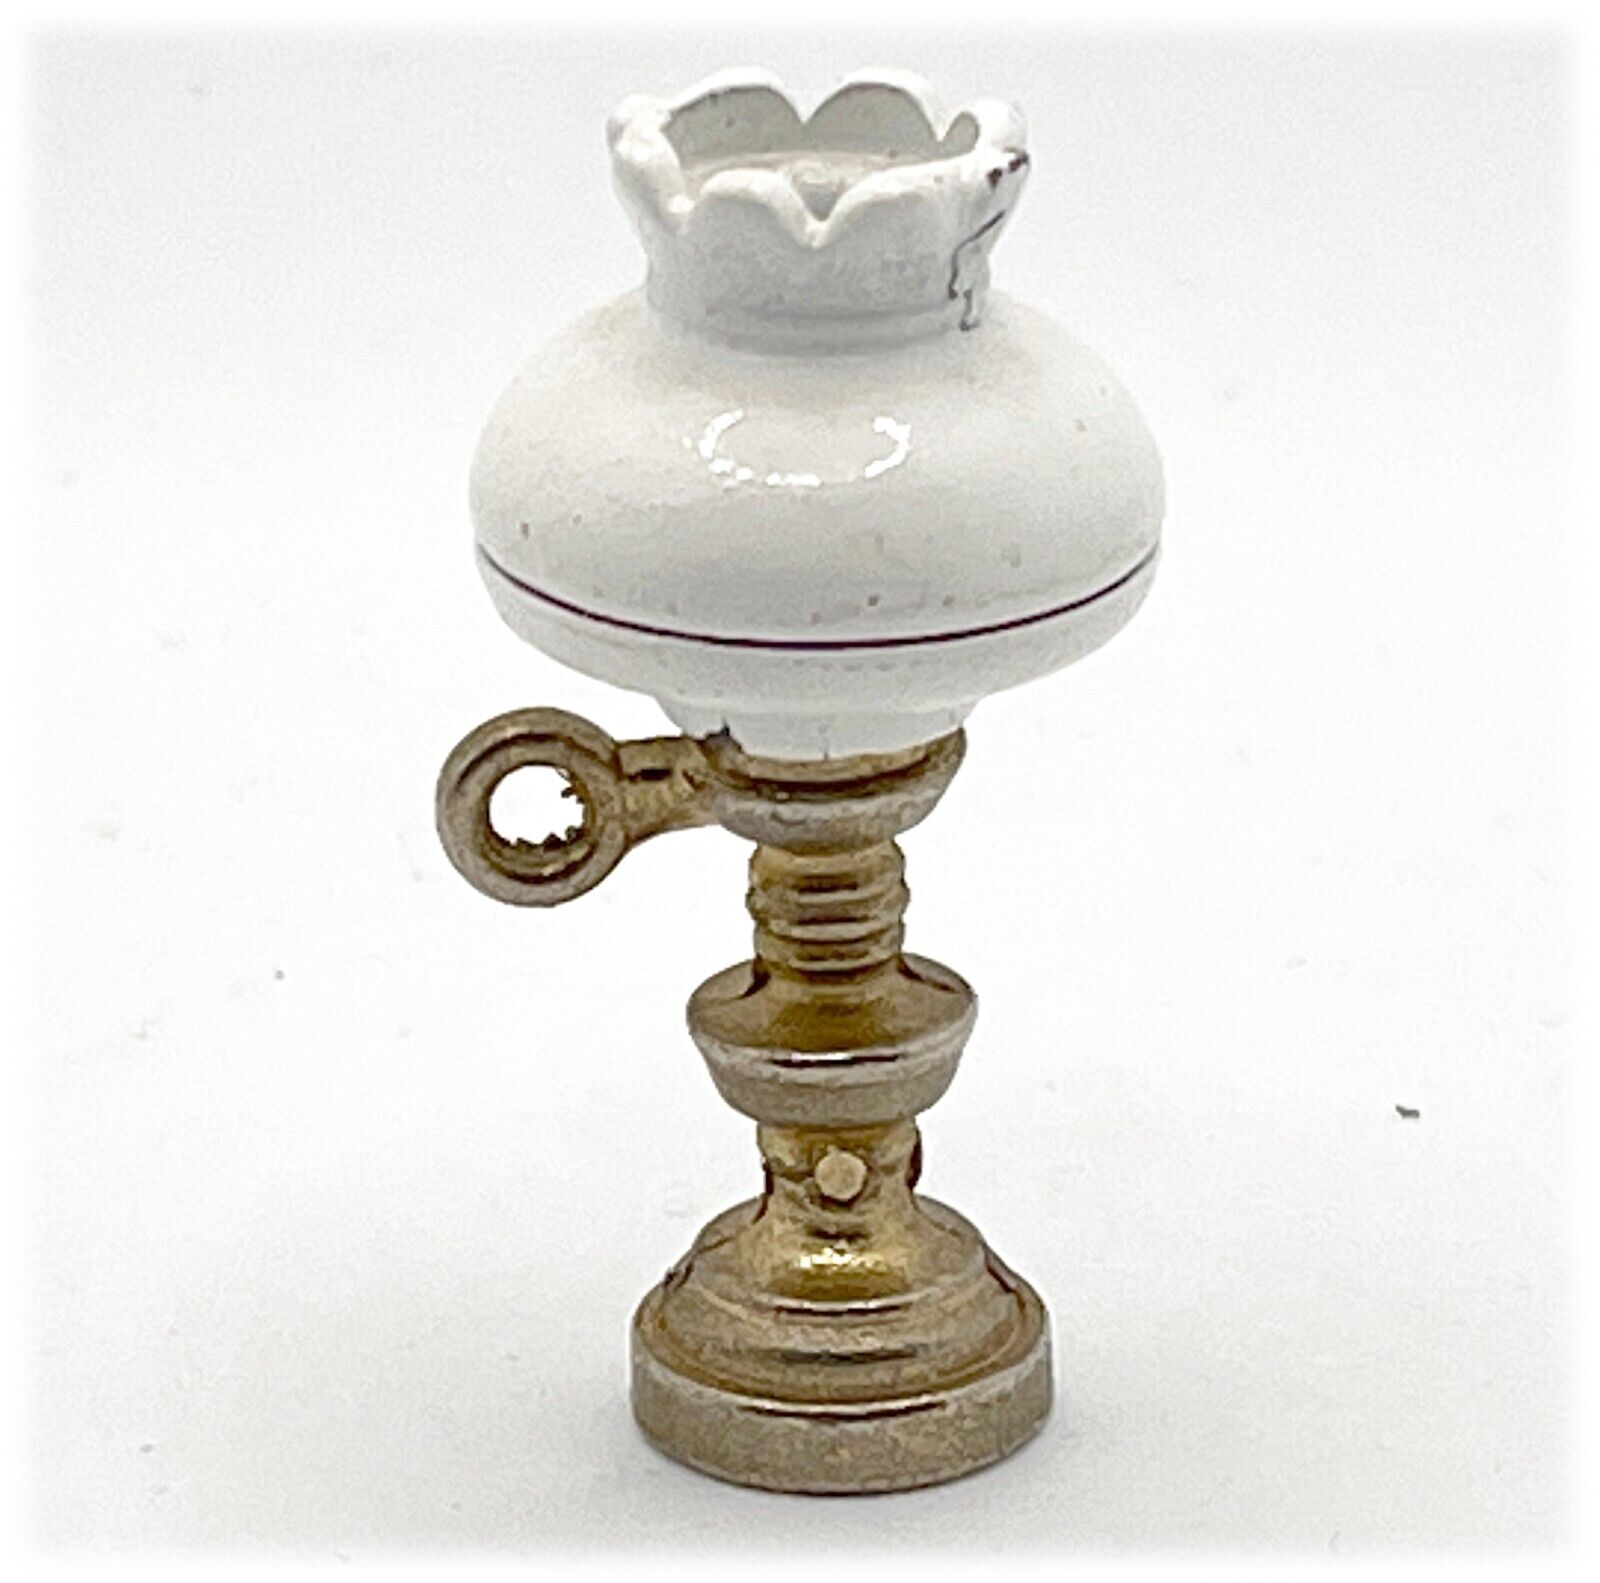 Miniature Hurricane Oil Lamp, Dollhouse Lamp Accessory, Miniature Table Lamp